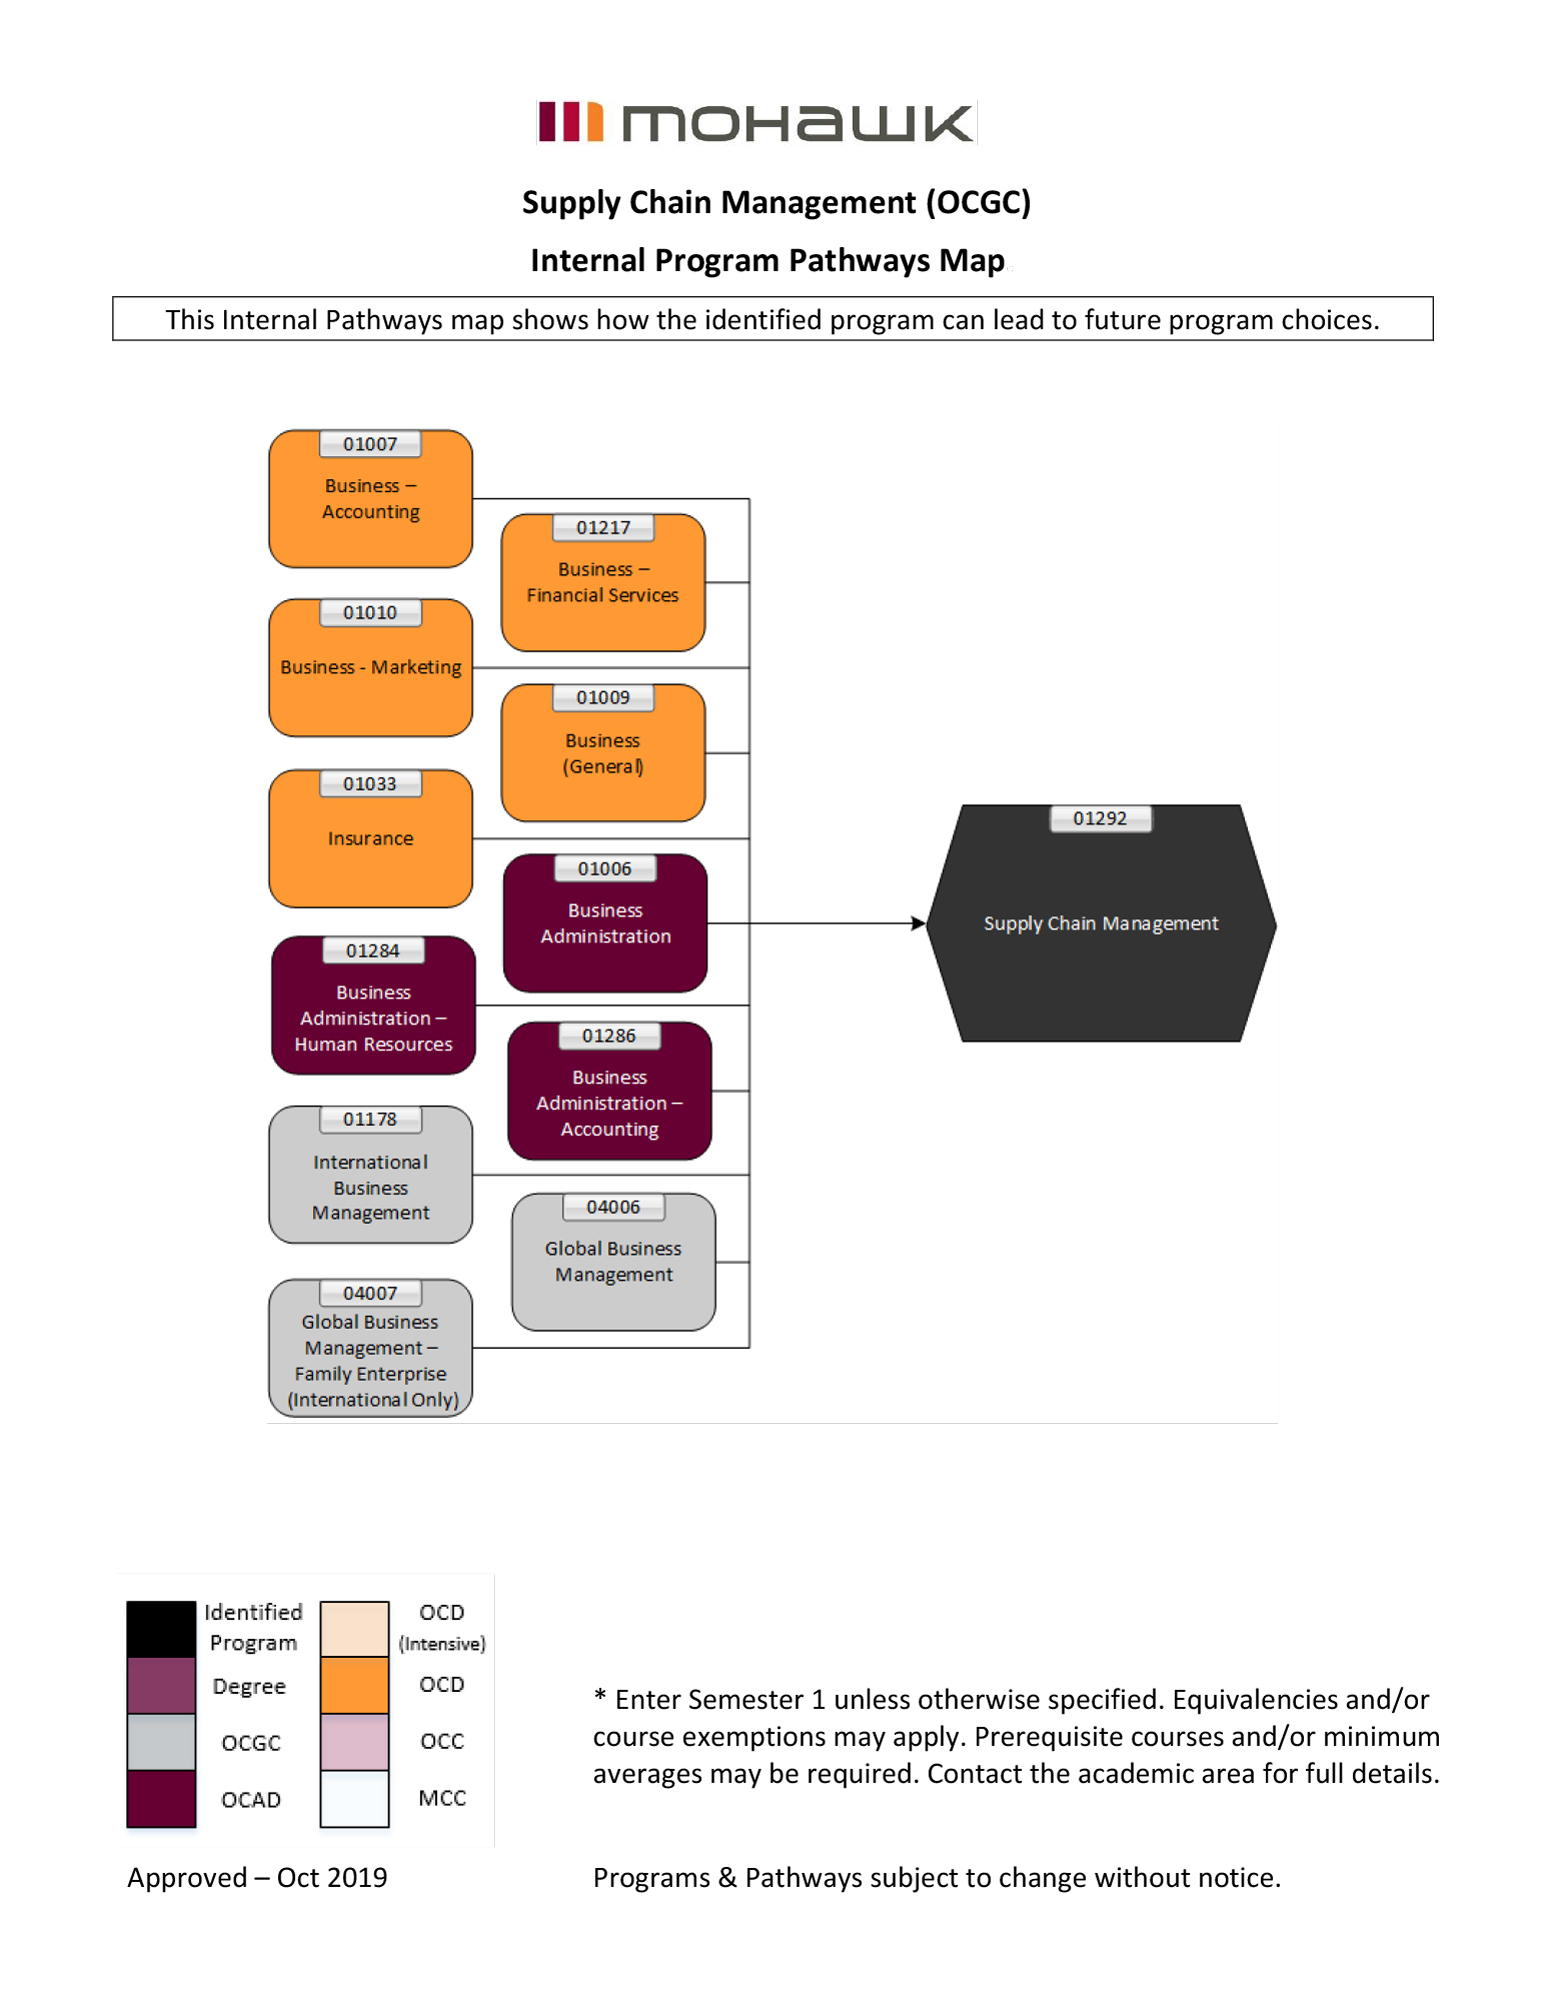 Supply Chain Management pathways map